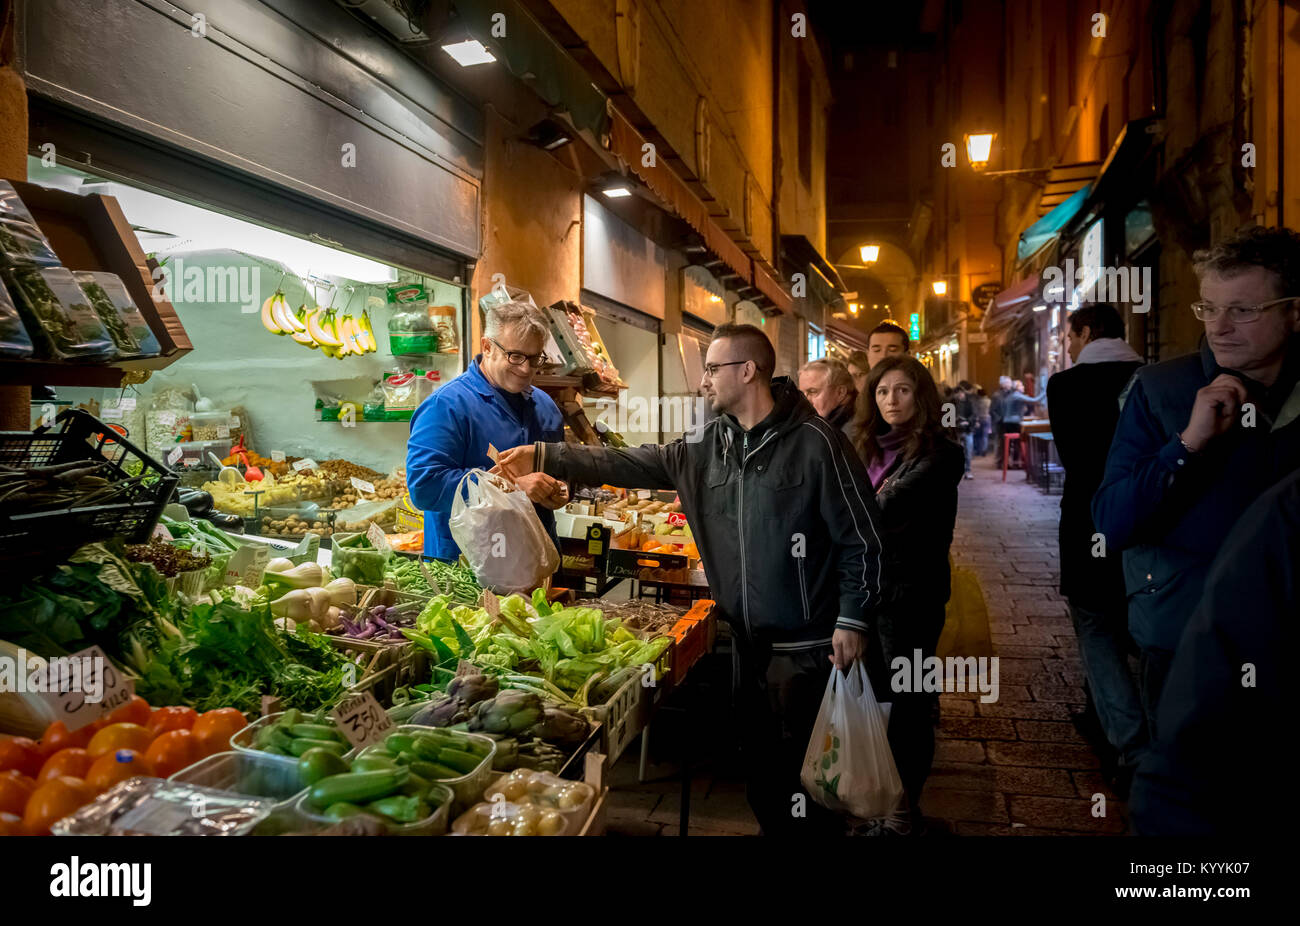 Vegetable market stall shop in Via Pescherie Vecchie night market, Bologna, Italy Stock Photo